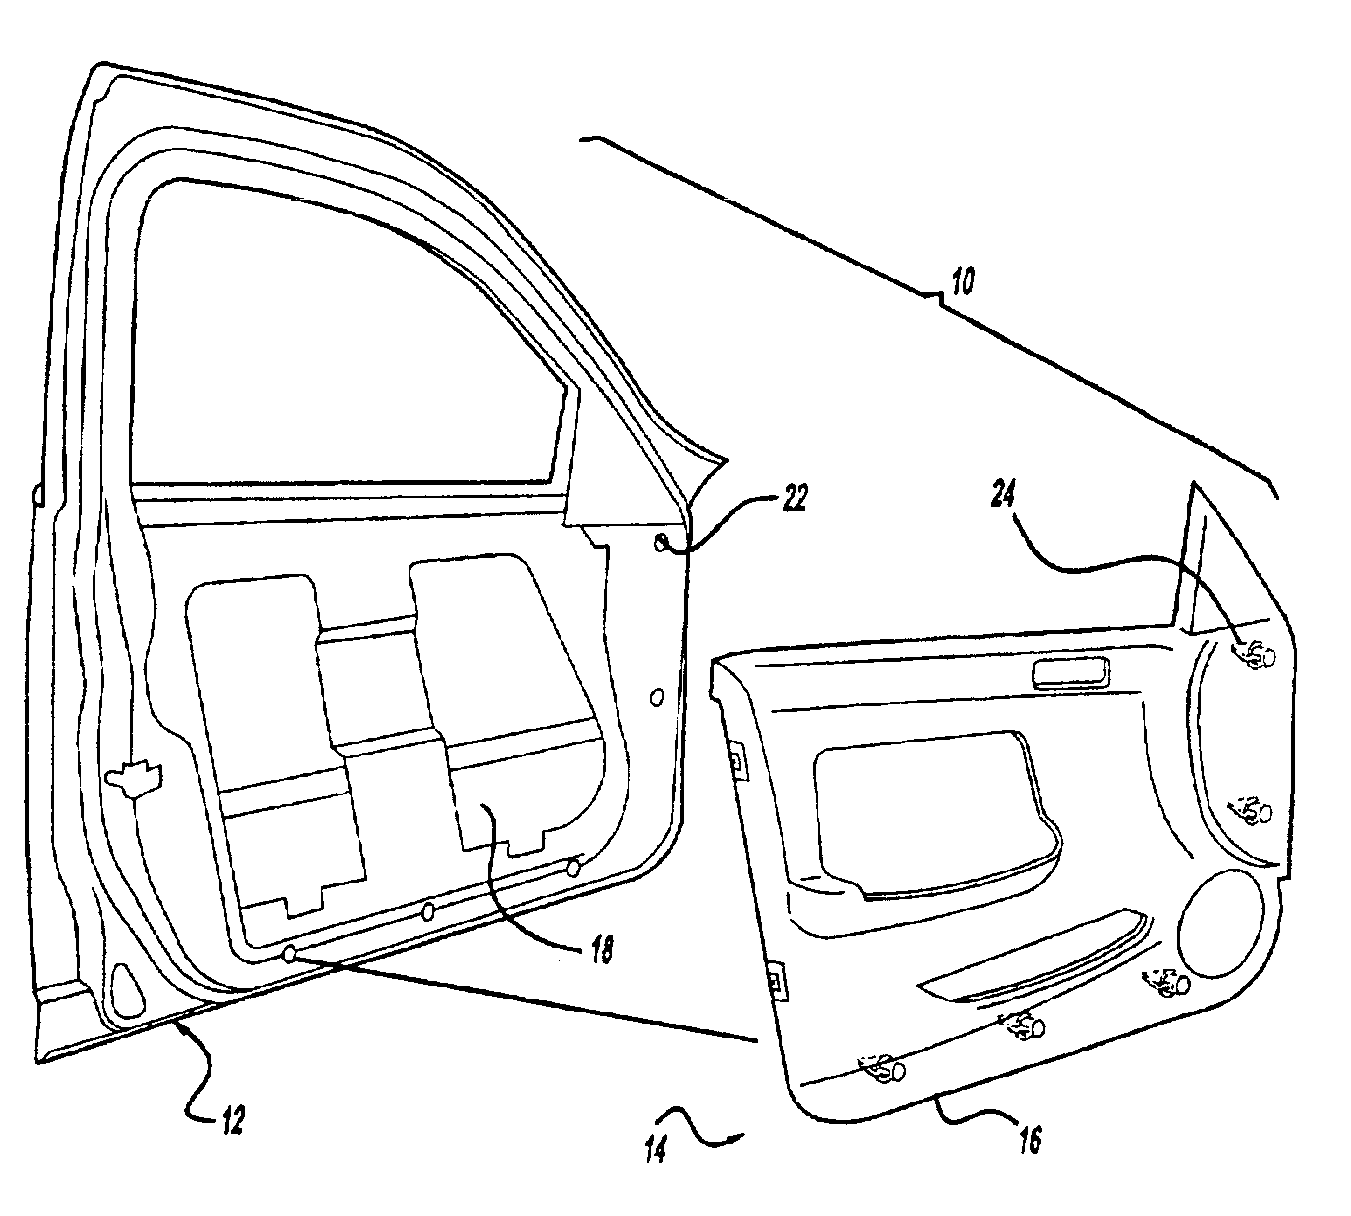 Vehicular door trim having a molded-in substrate fastener